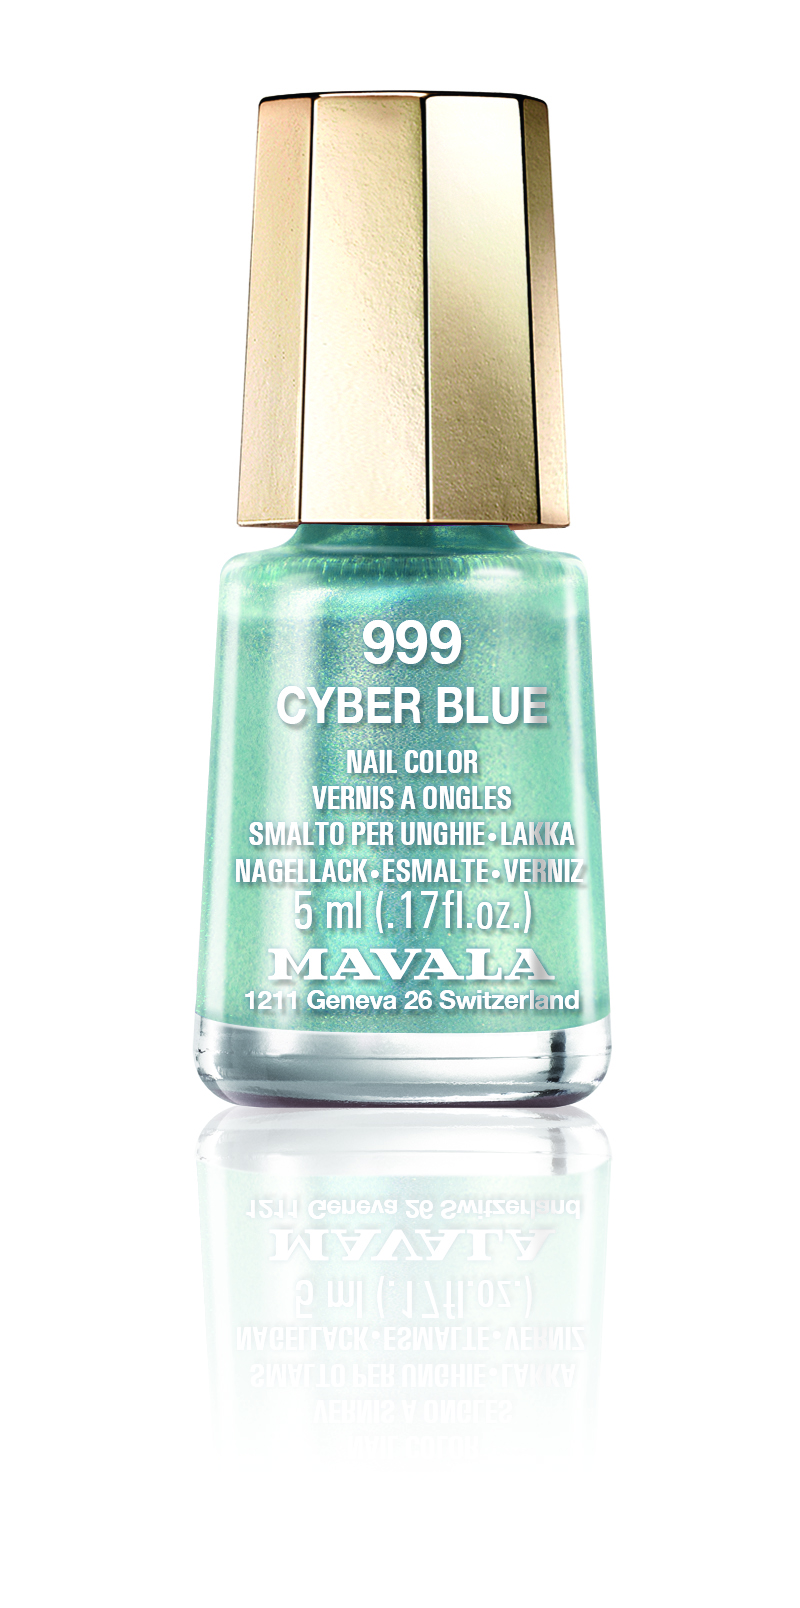 Mavala Cyber Blue nail polish